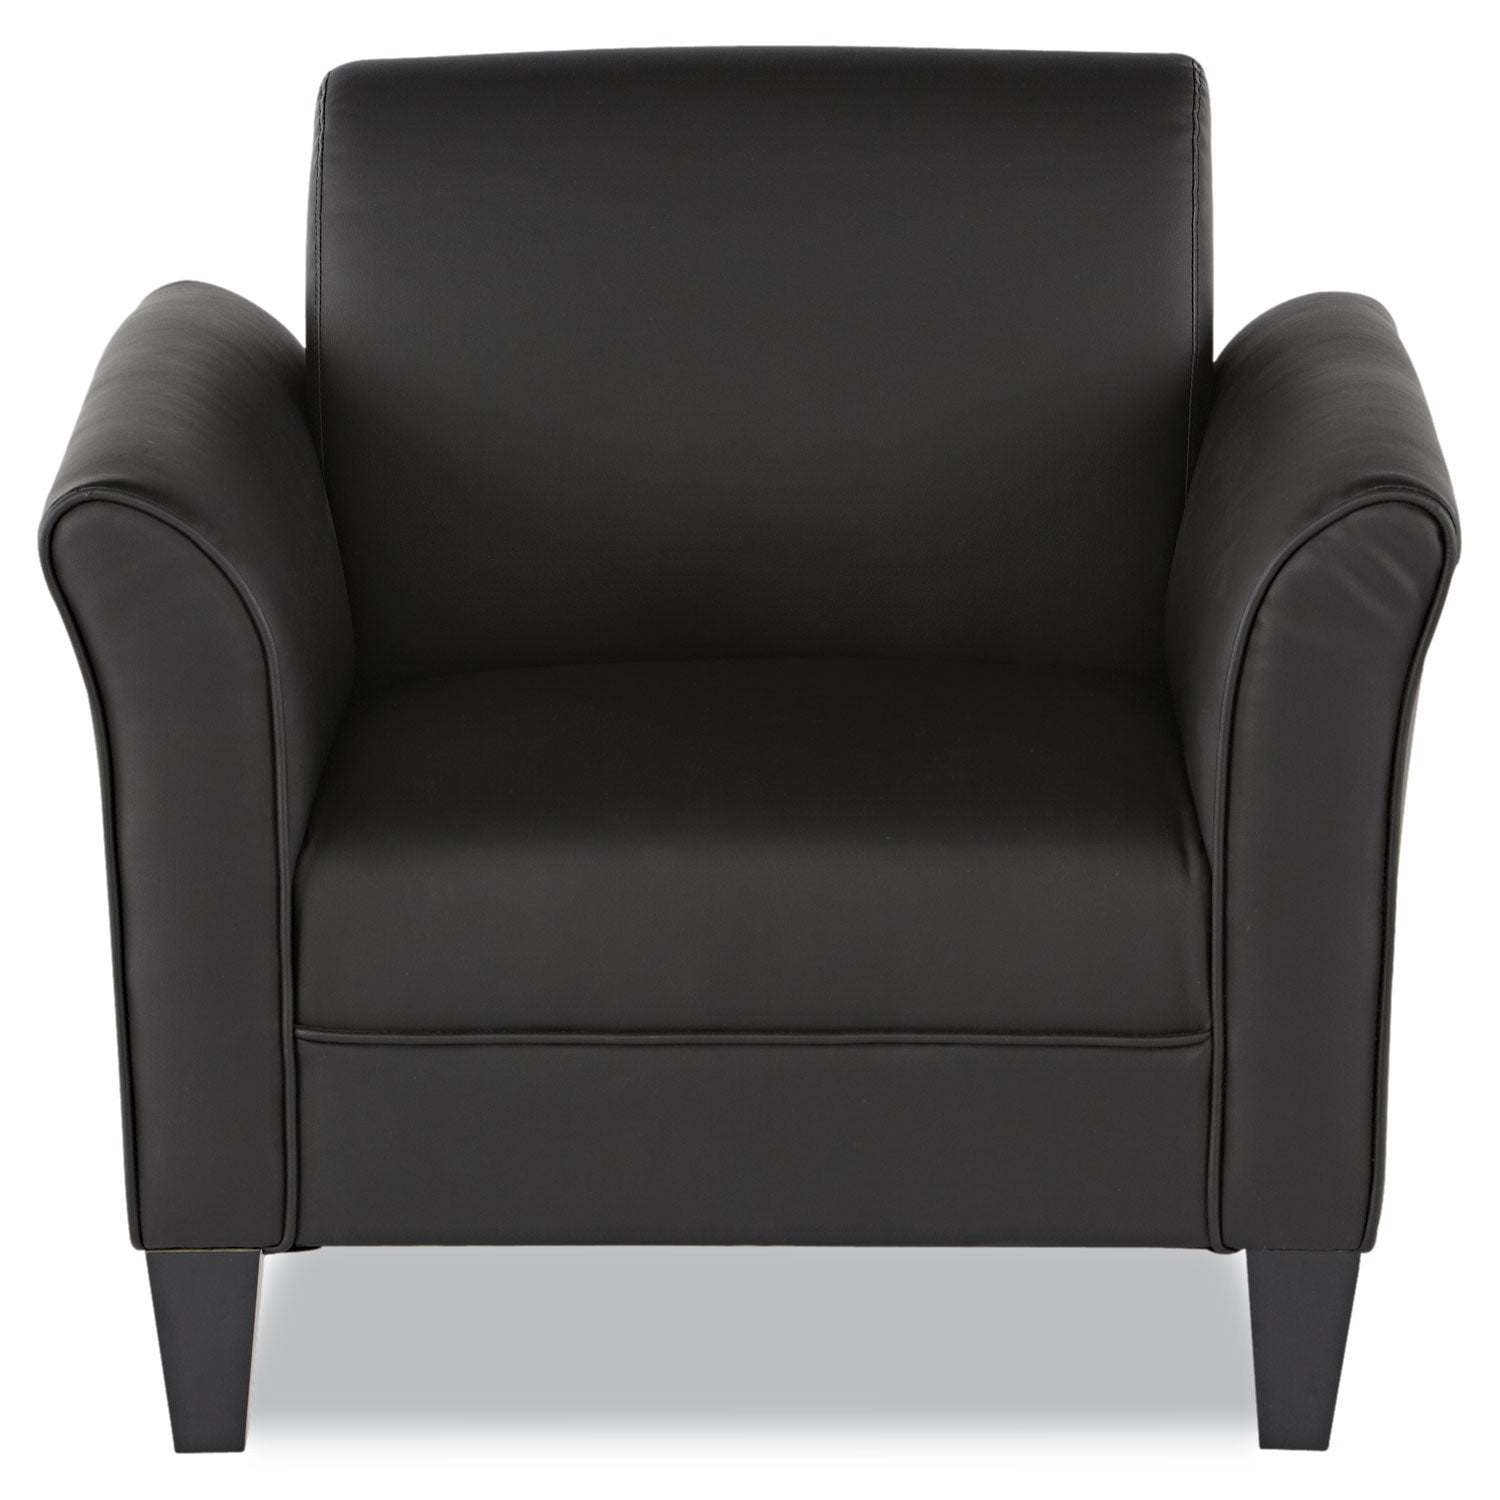 Alera Reception Lounge Sofa Series Club Chair, 35.43" x 30.7" x 32.28", Black Seat, Black Back, Black Base - 